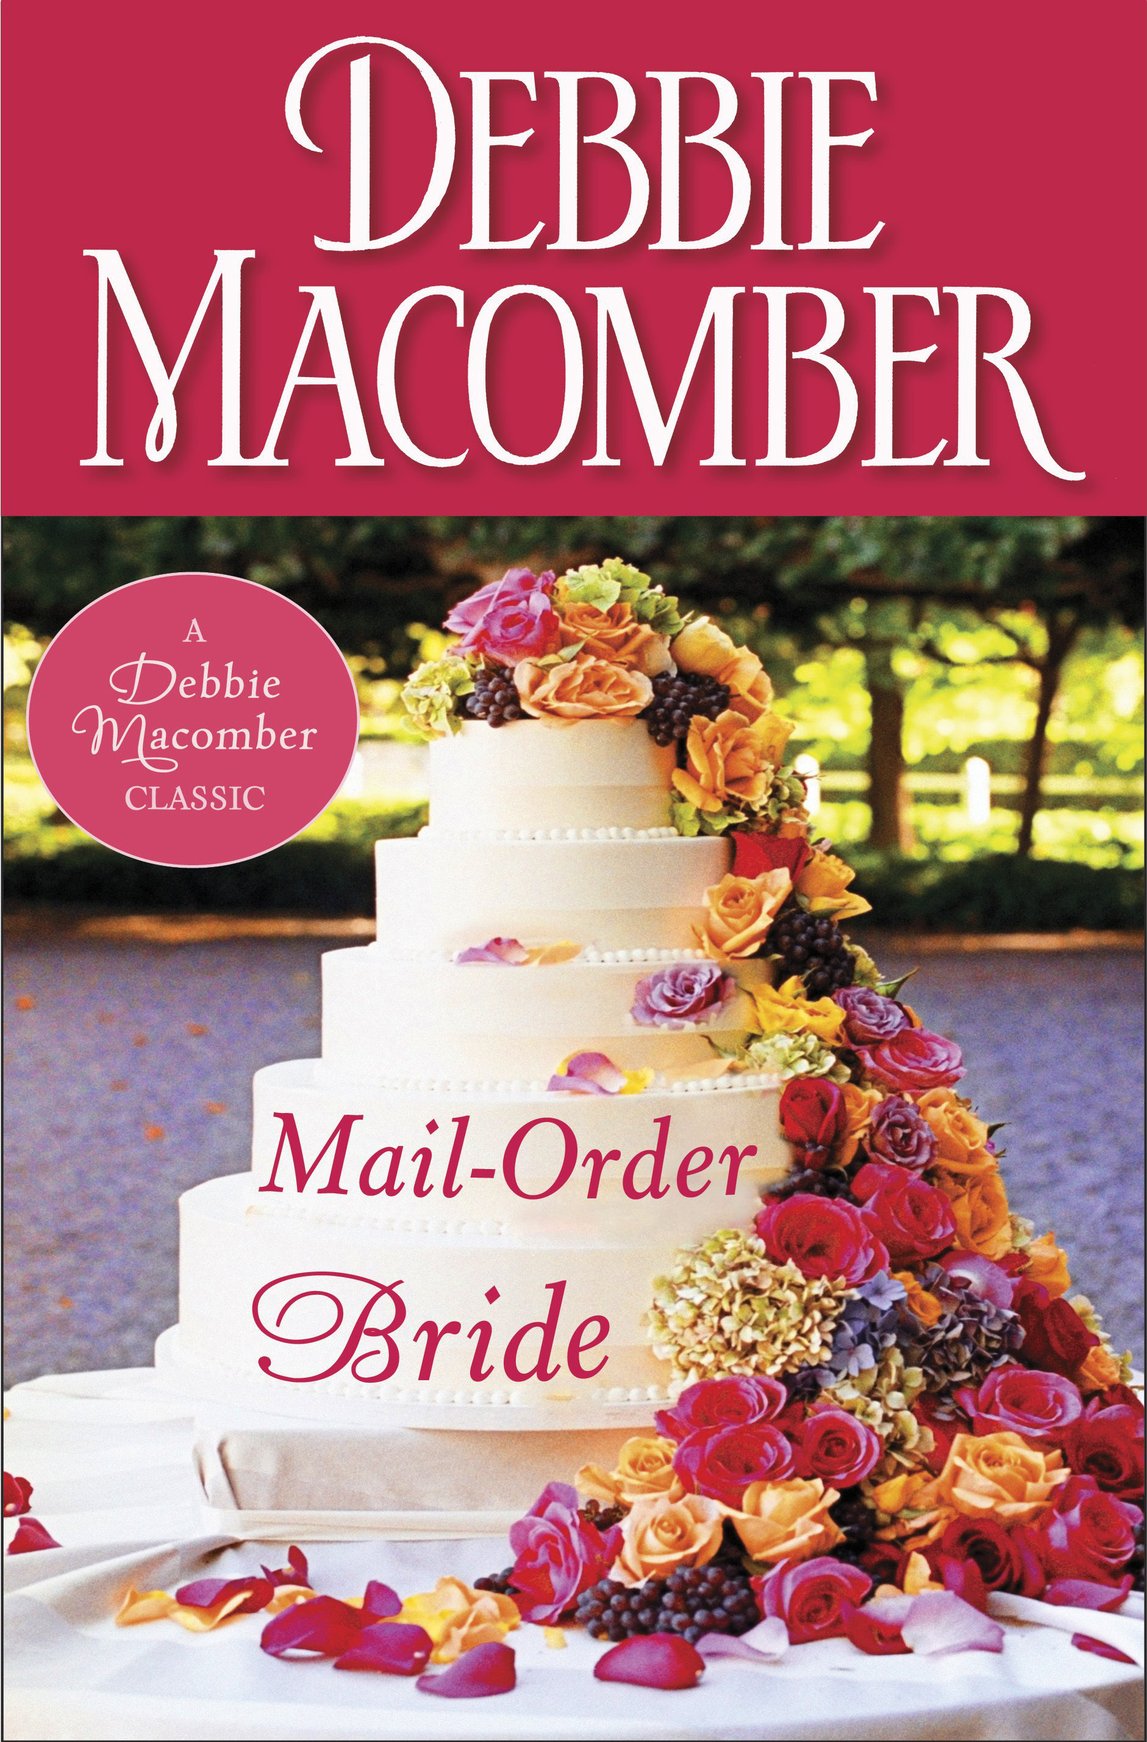 Mail-Order Bride (2016) by Debbie Macomber